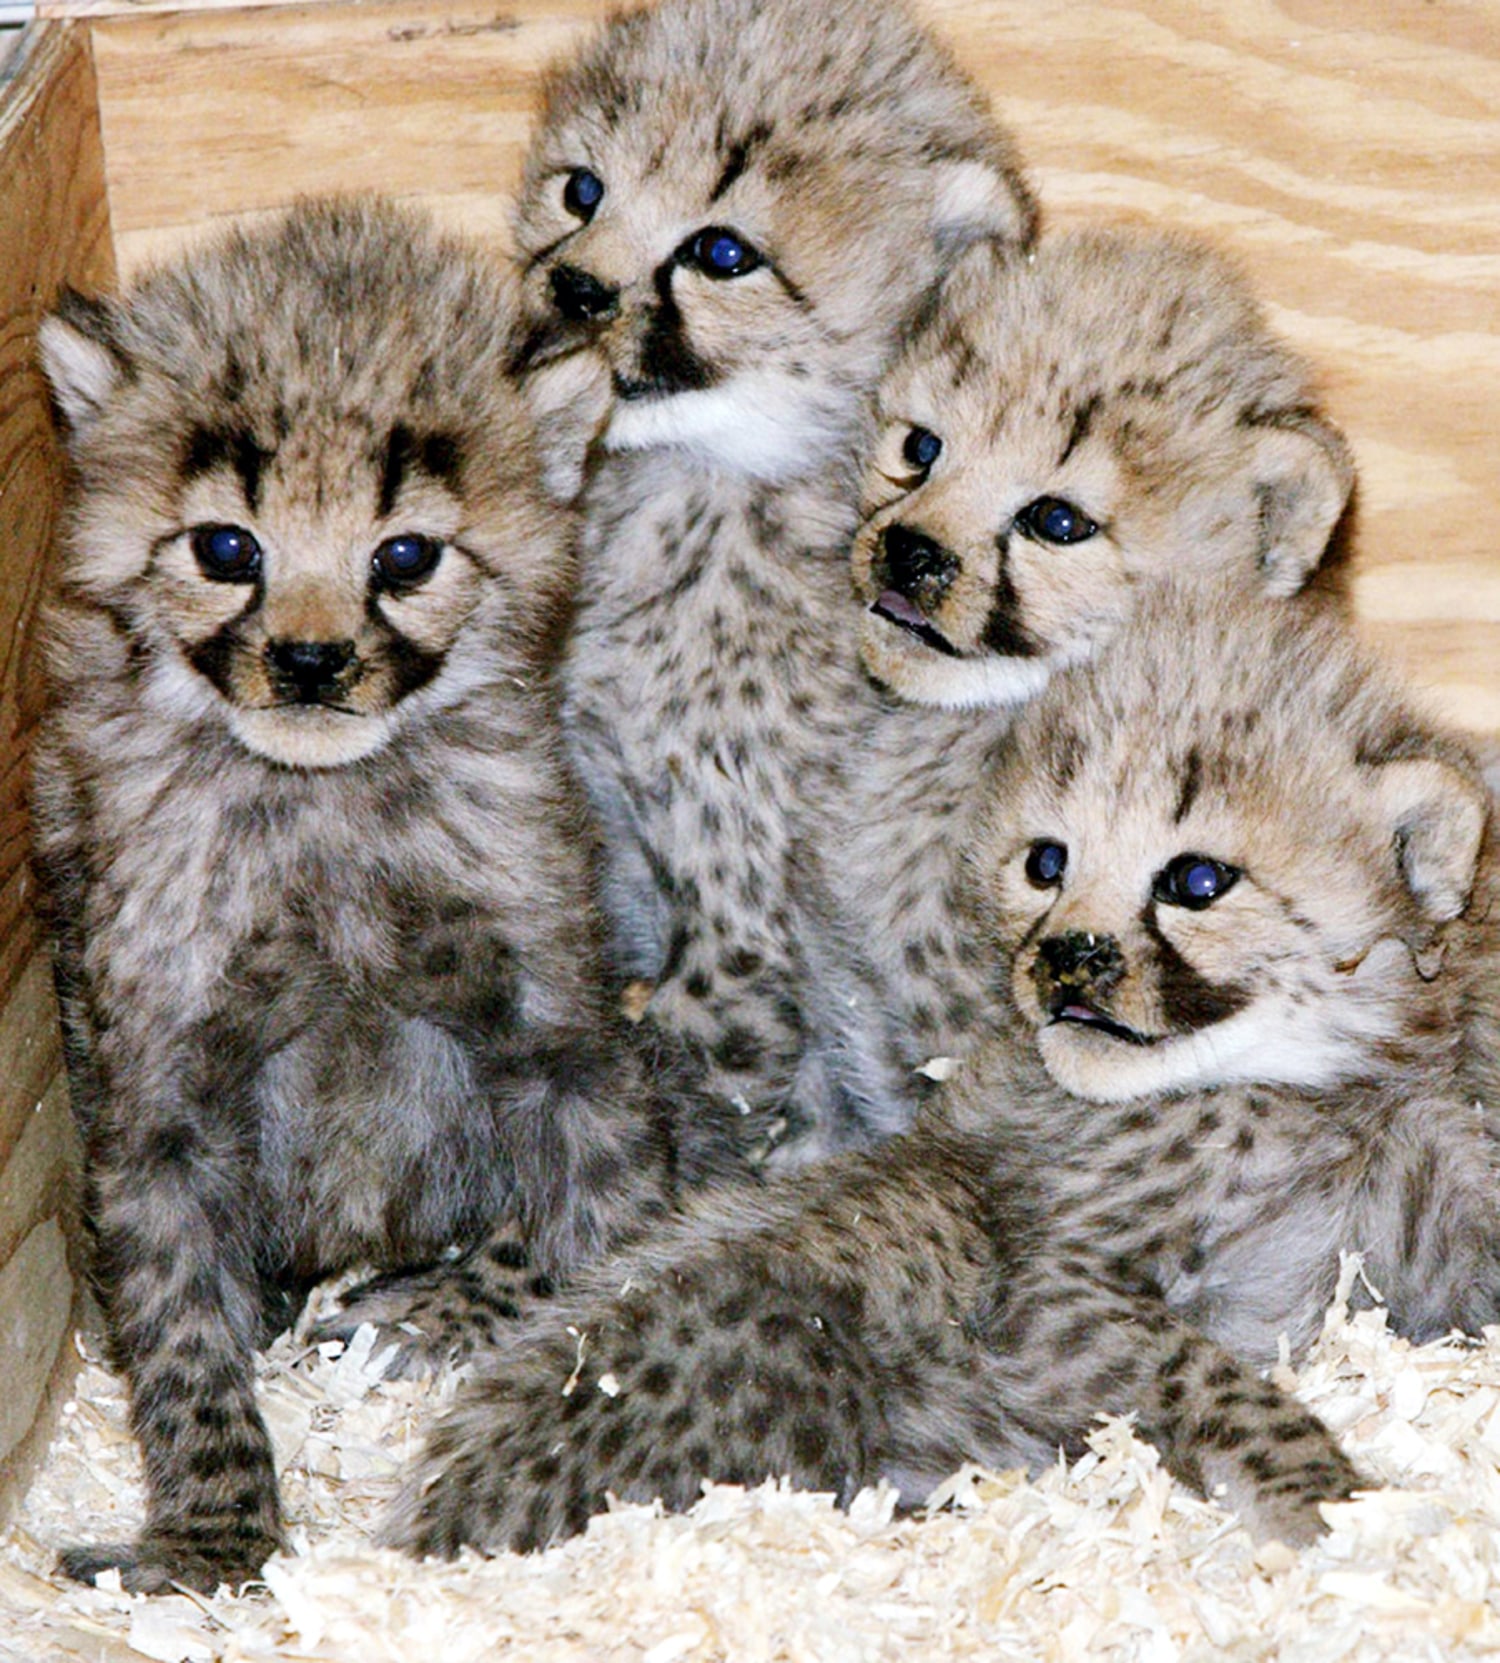 National Zoo puts cheetah cubs online